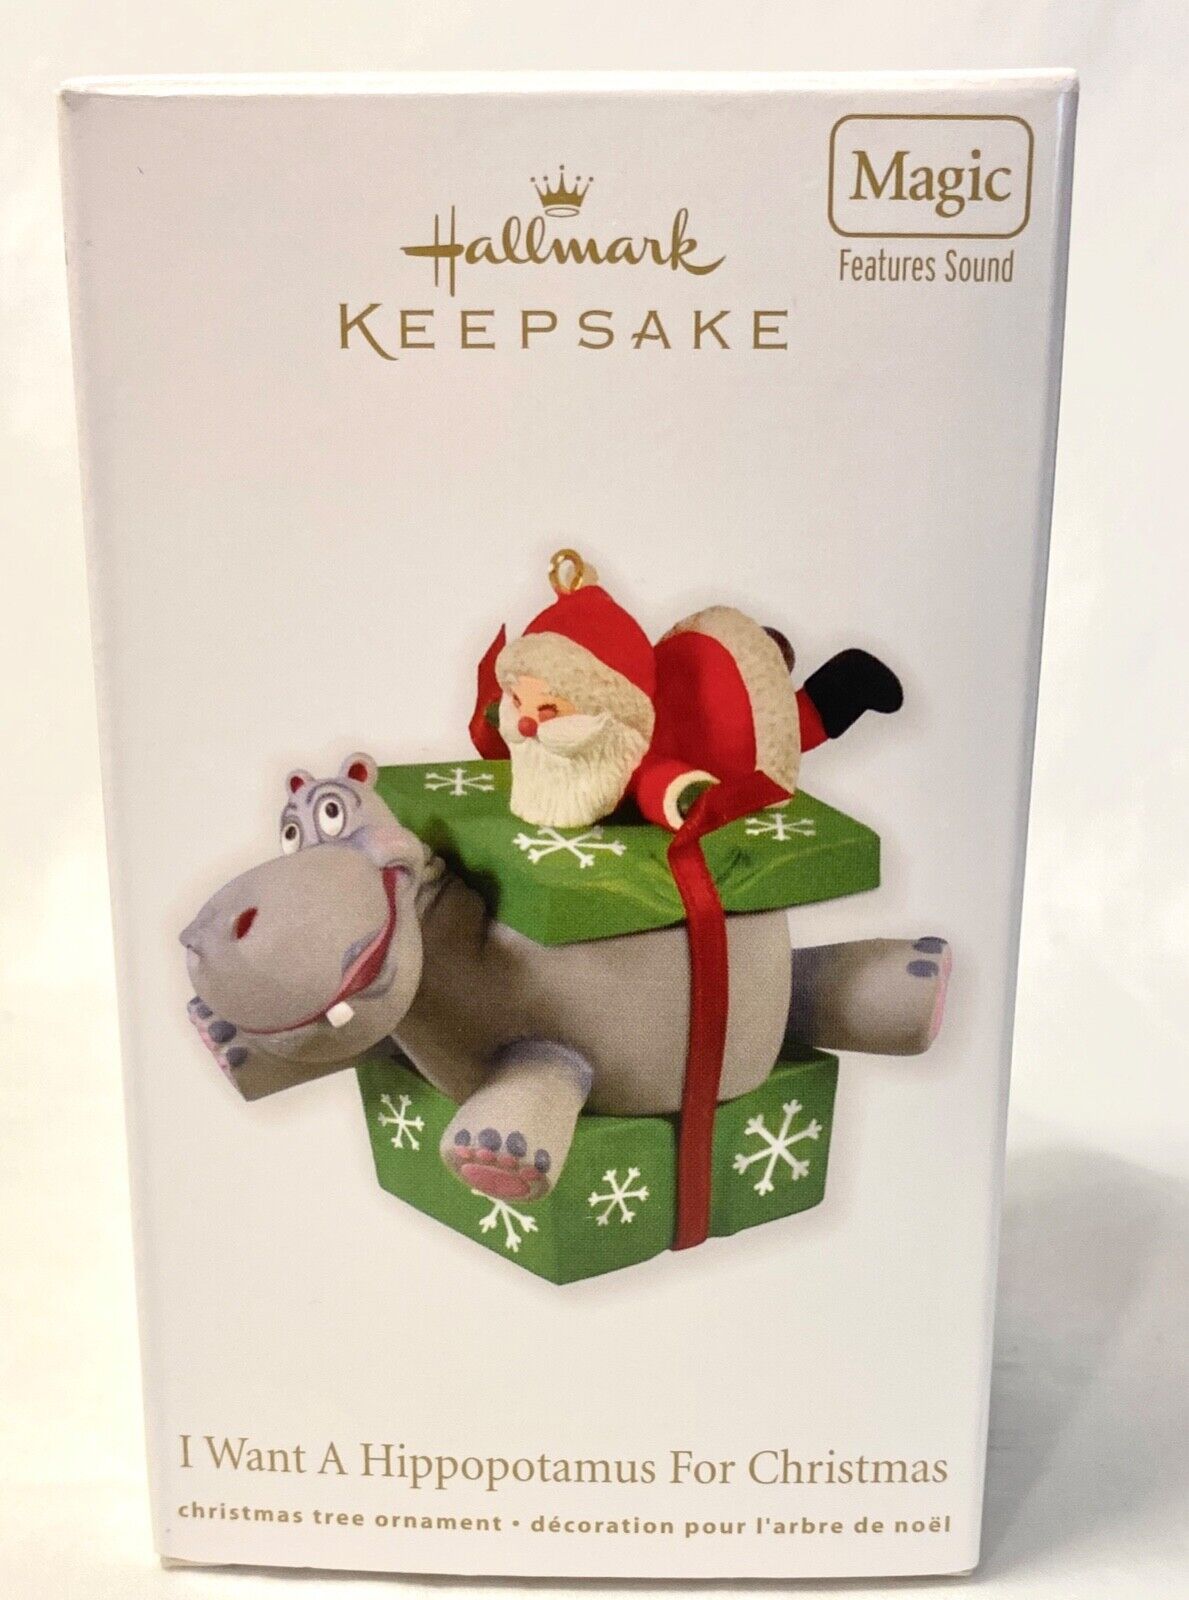 Hallmark Keepsake 2012 “I WANT A HIPPOPOTAMUS FOR CHRISTMAS” Ornament In Box